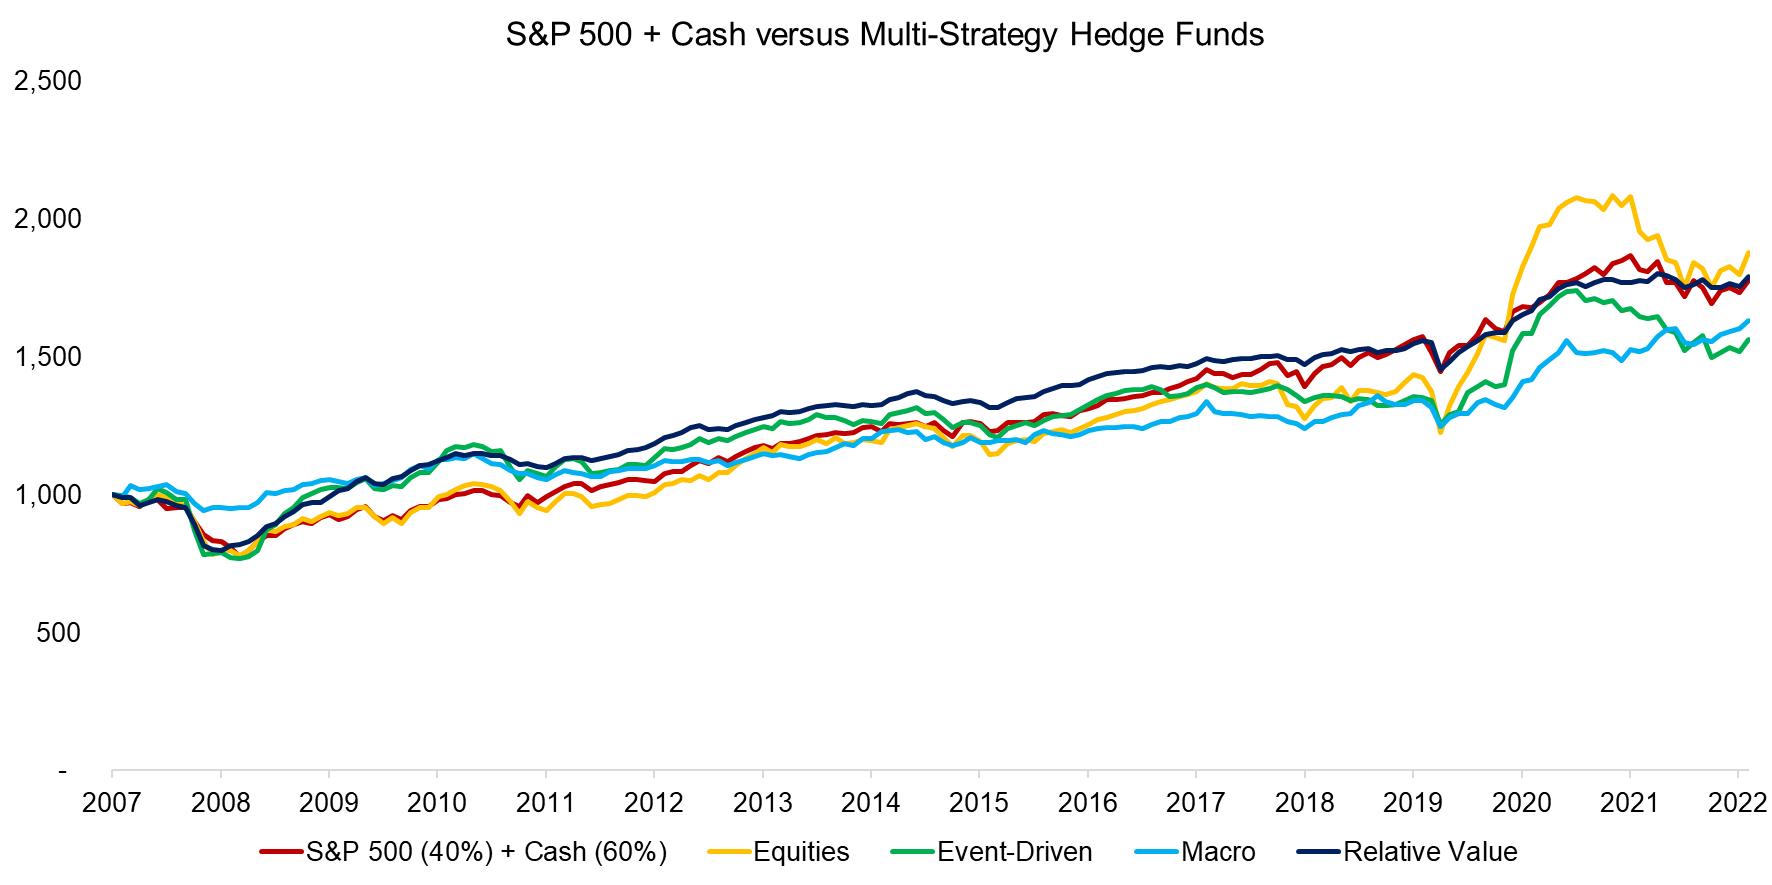 S&P 500 + Cash versus Multi-Strategy Hedge Funds